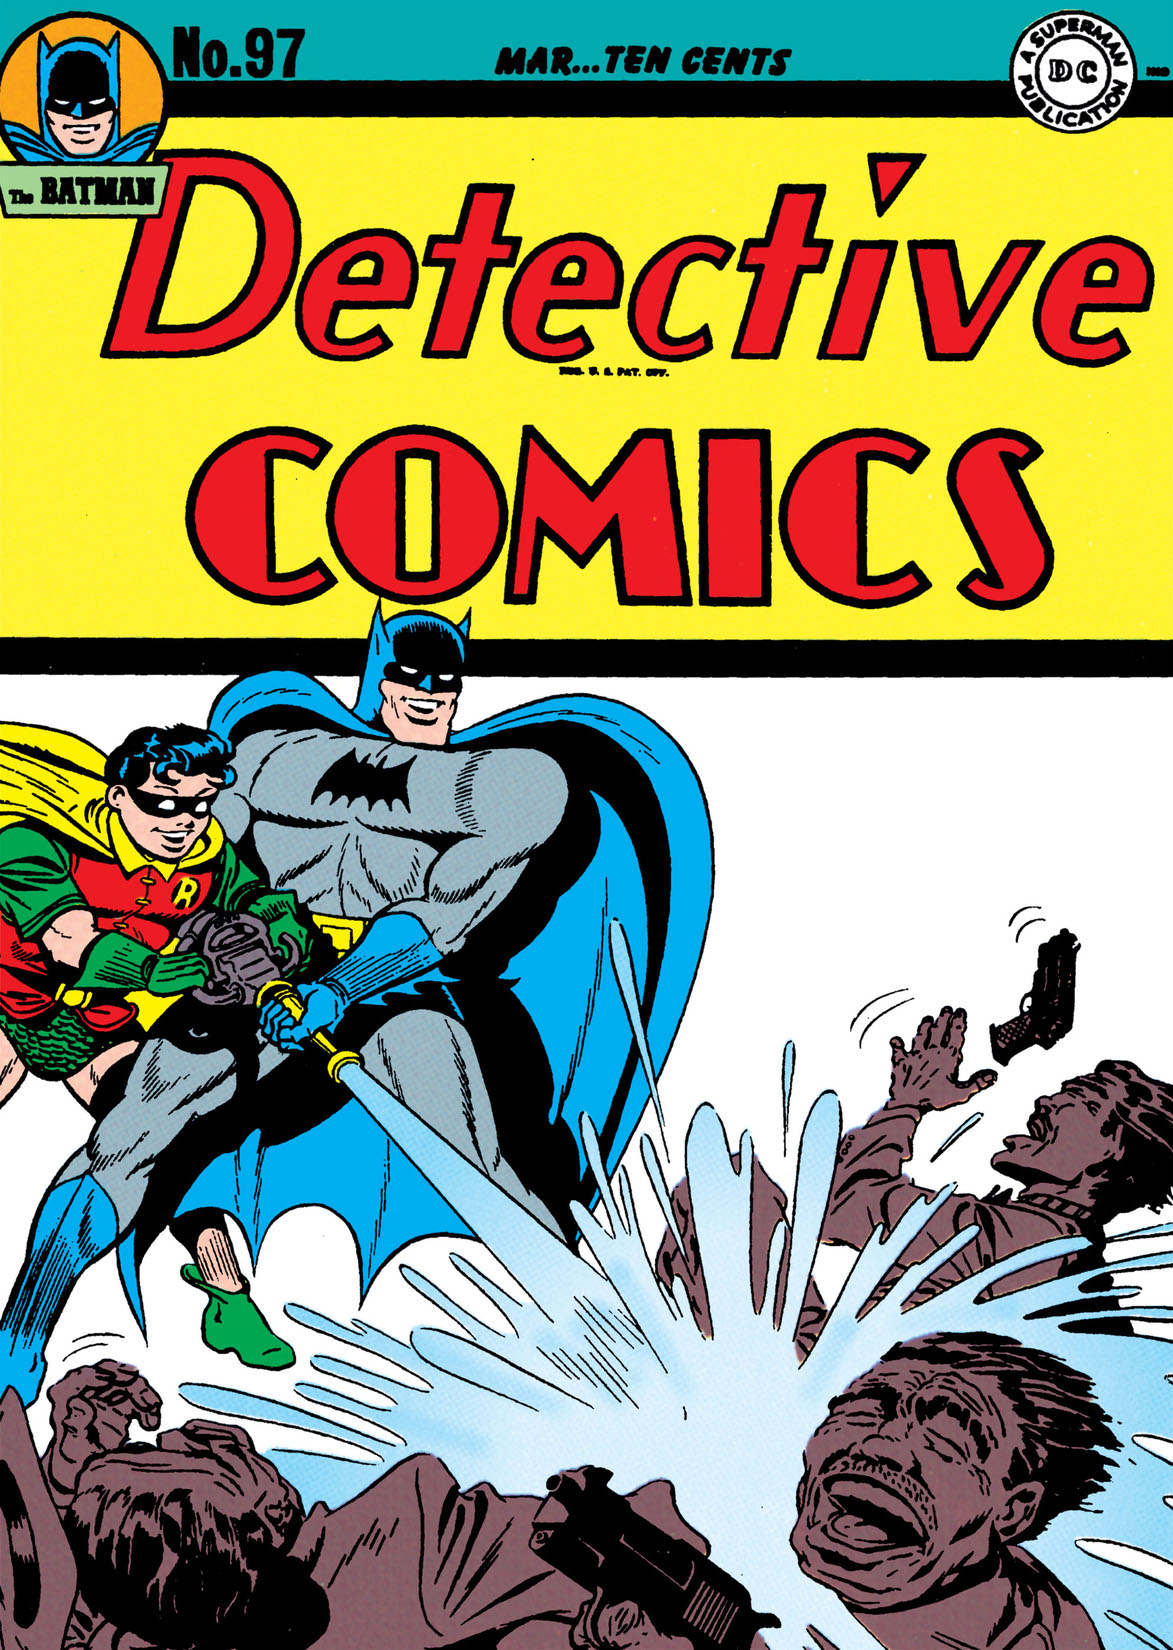 Detective Comics (1937-) #97 preview images